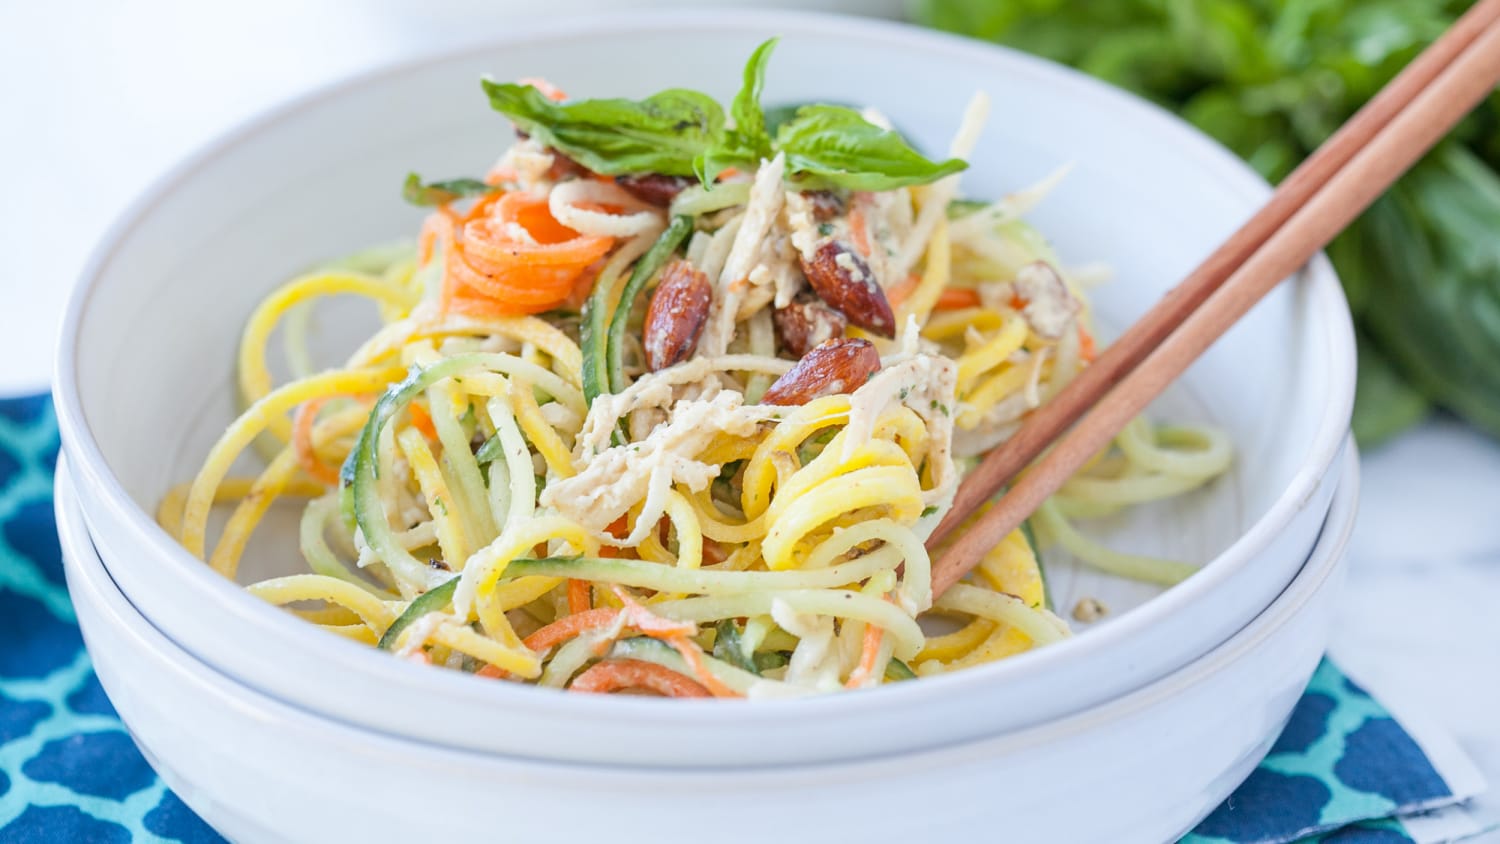 https://media-cldnry.s-nbcnews.com/image/upload/newscms/2015_30/687501/thai-salad-spiralizer-recipe-tease-today-150720.jpg